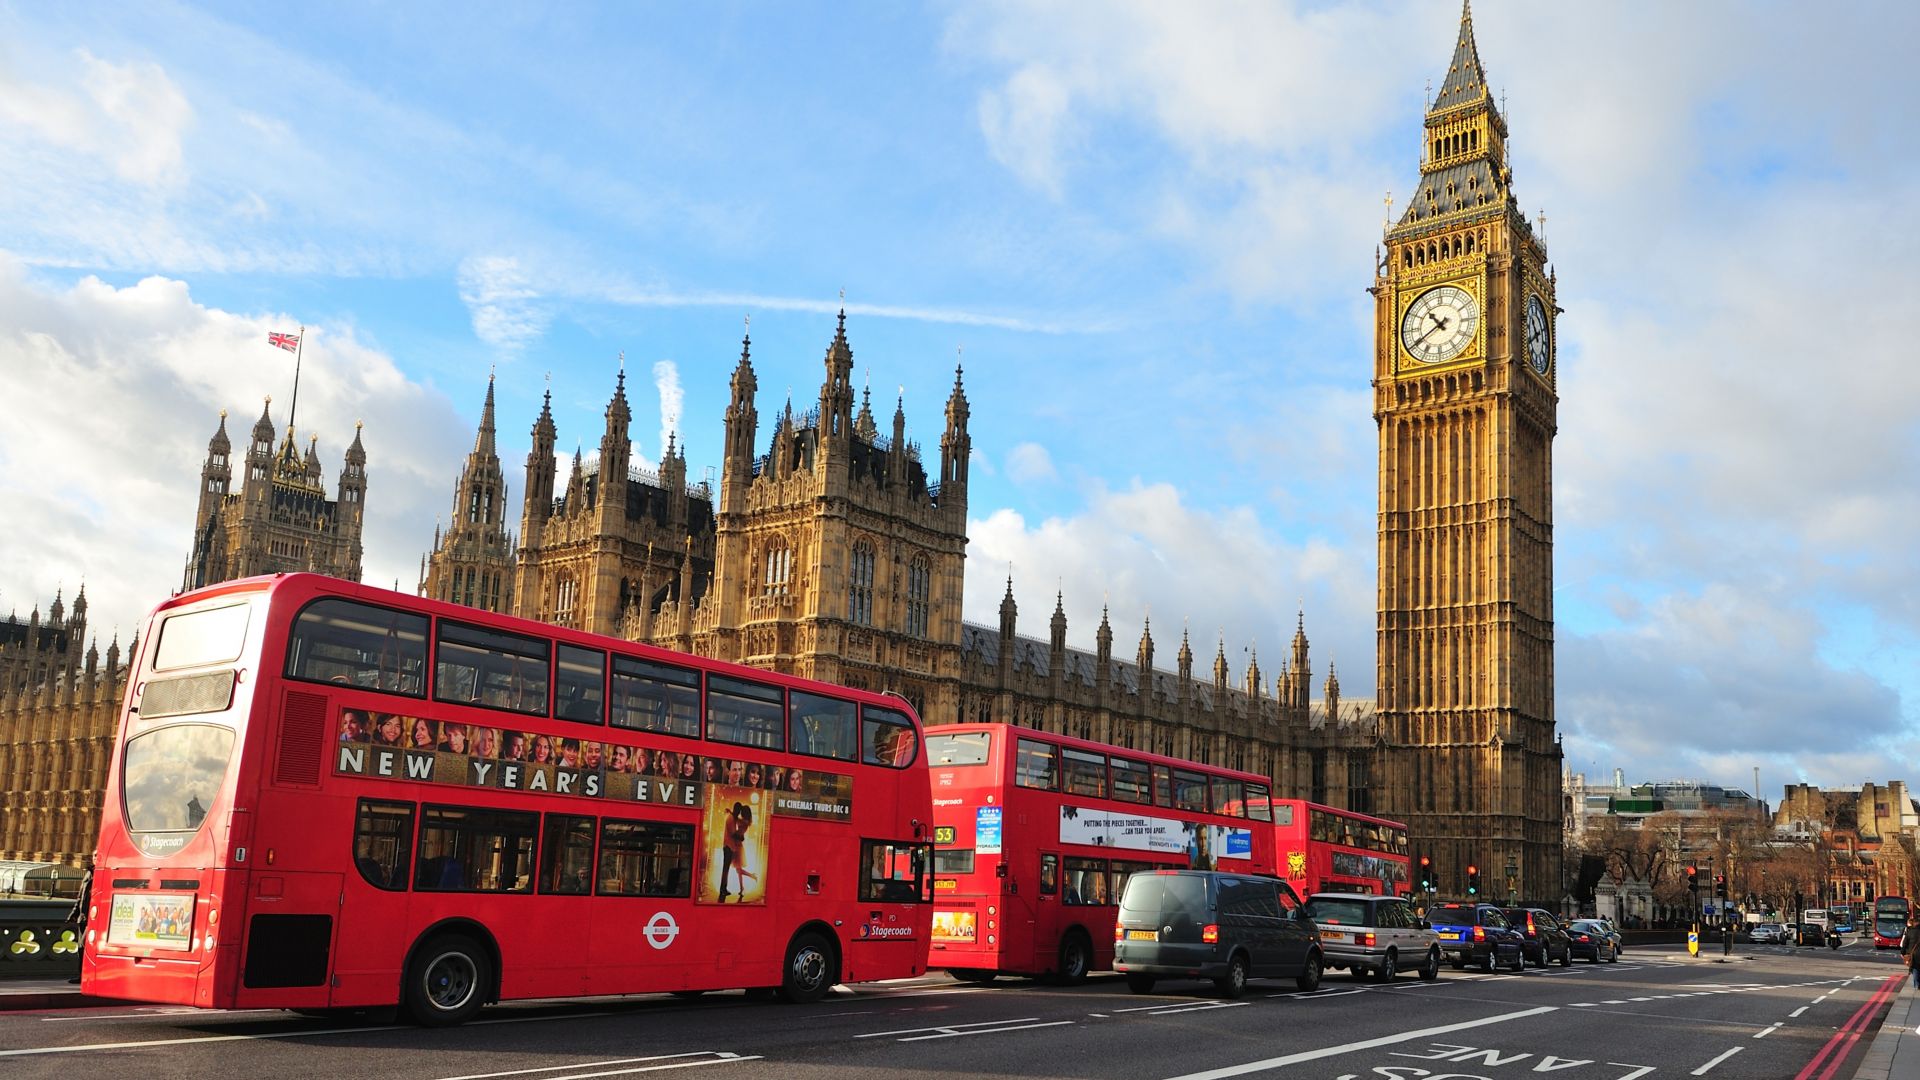 Лондон, Англия, Биг Бен, Вестминстерское аббатство, город, автобус, путешествия, туризм, London, England, Big Ben, Westminster Abbey, city, bus, travel, tourism (horizontal)